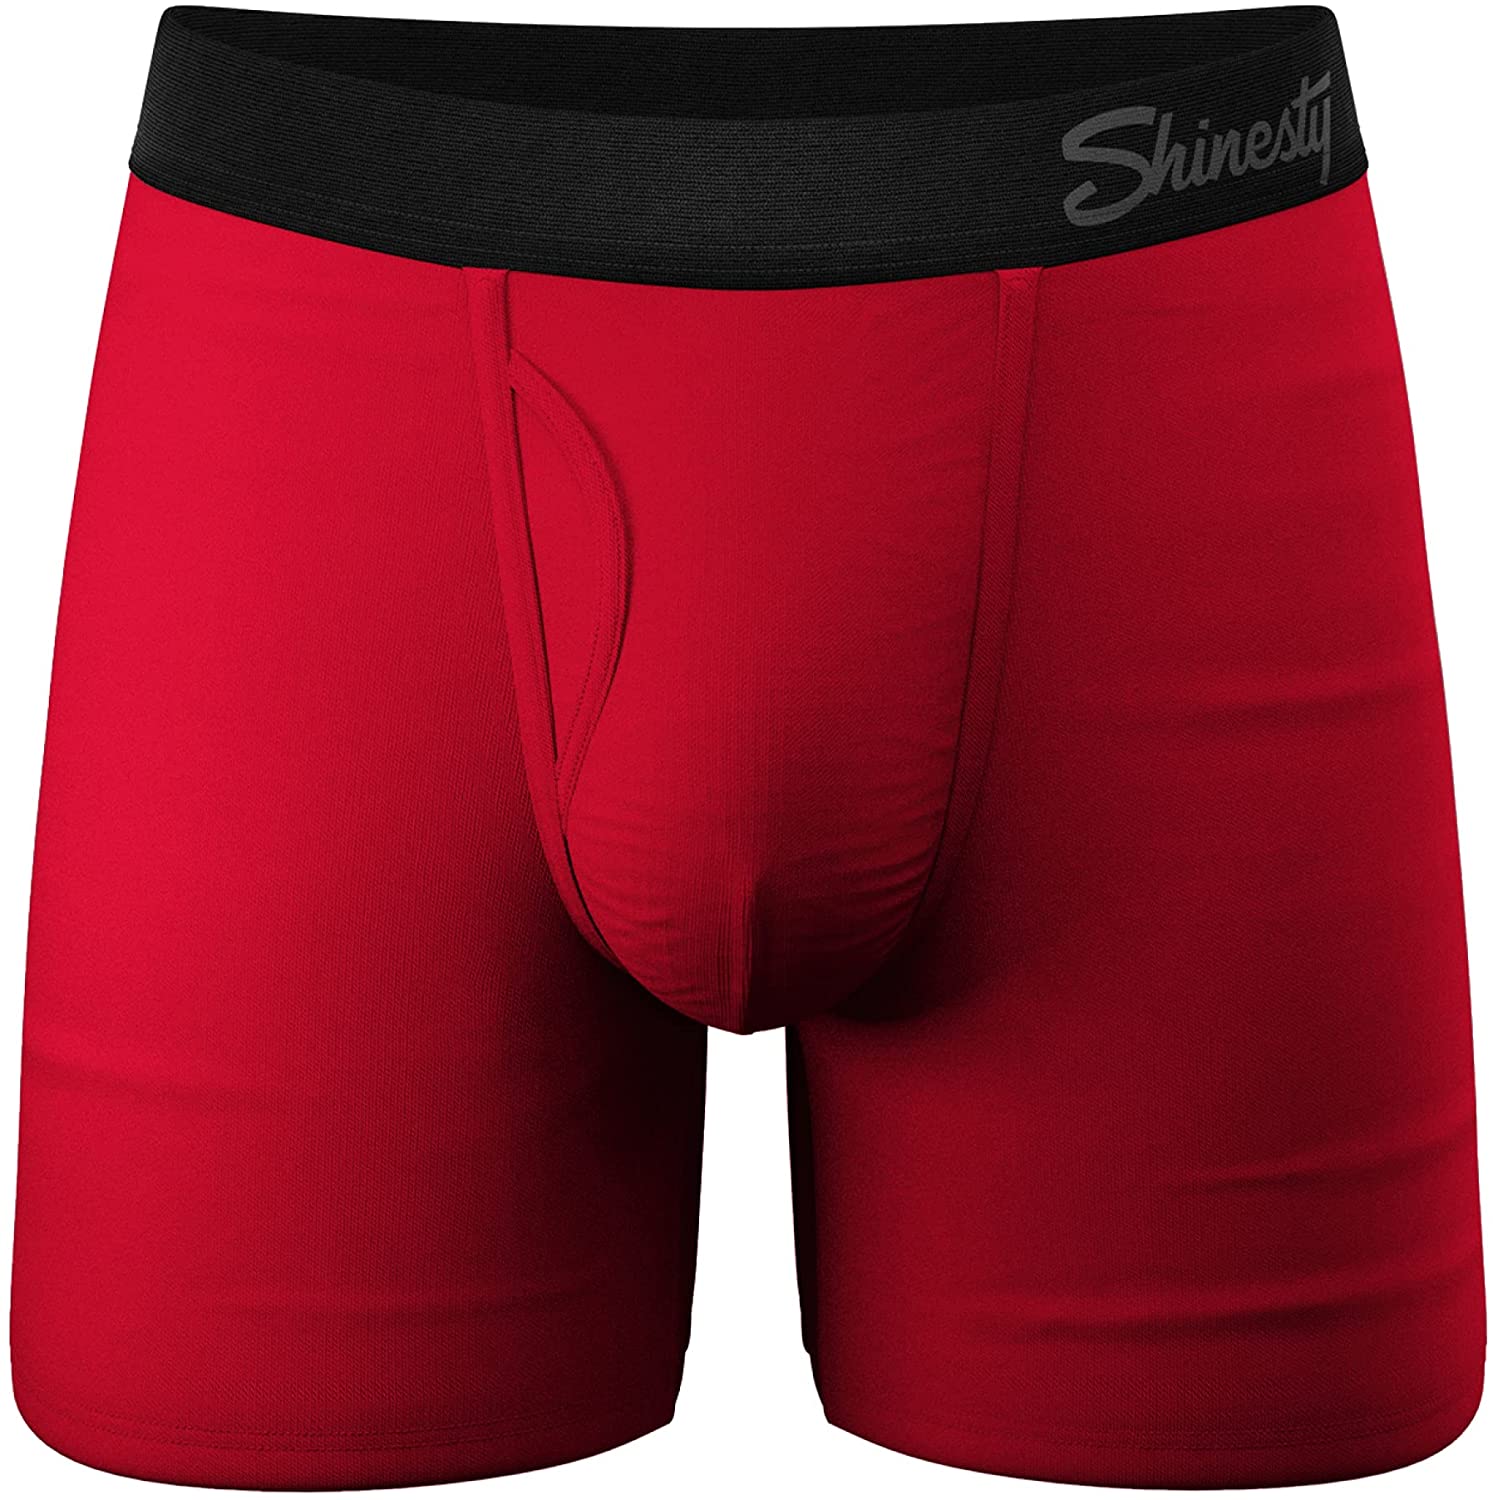 Shinesty Ball Hammock Pouch Underwear For Men Mens